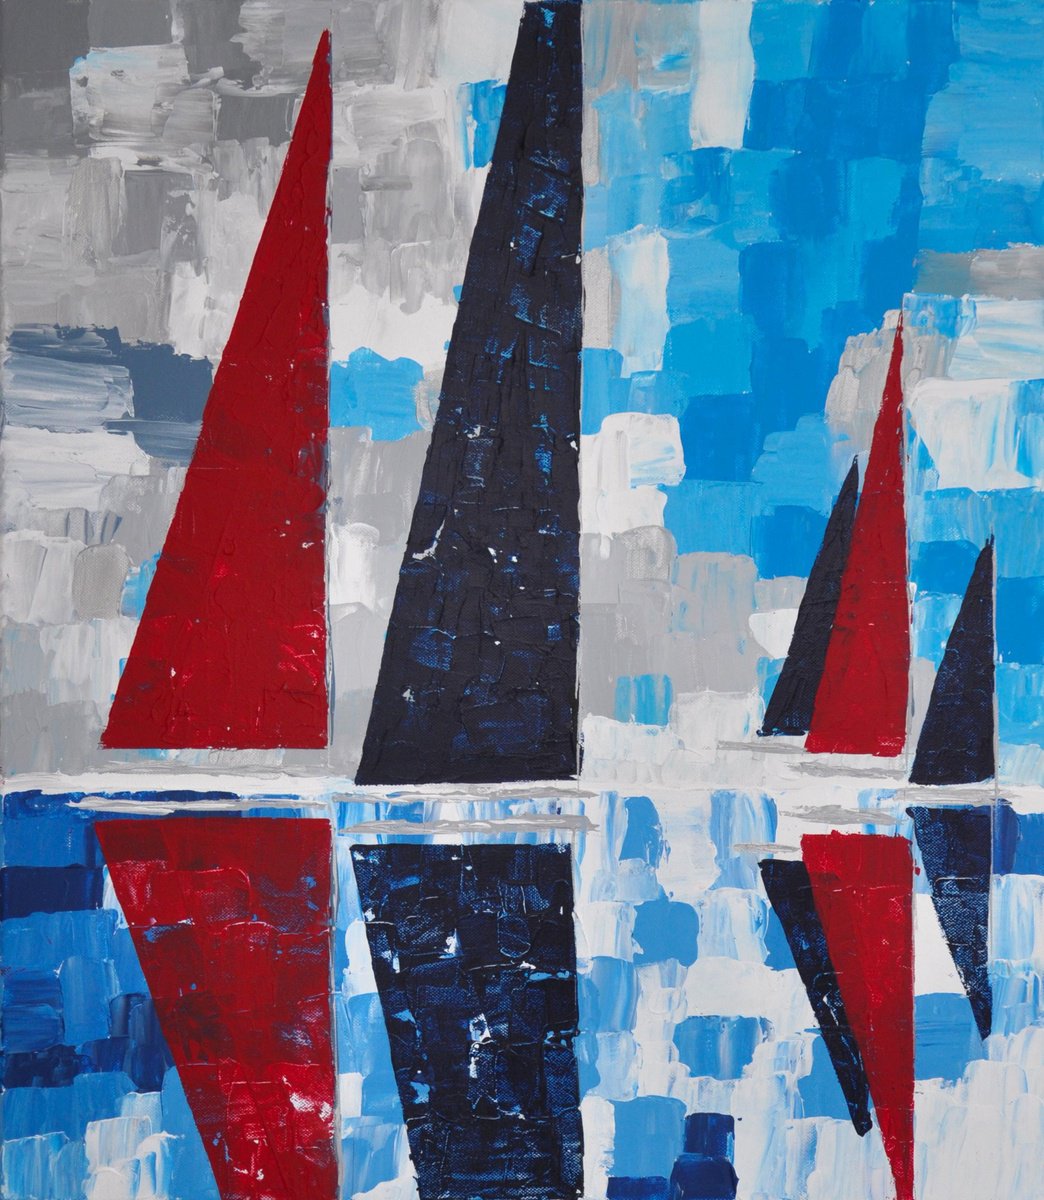 The big sails 2 by Bridg’